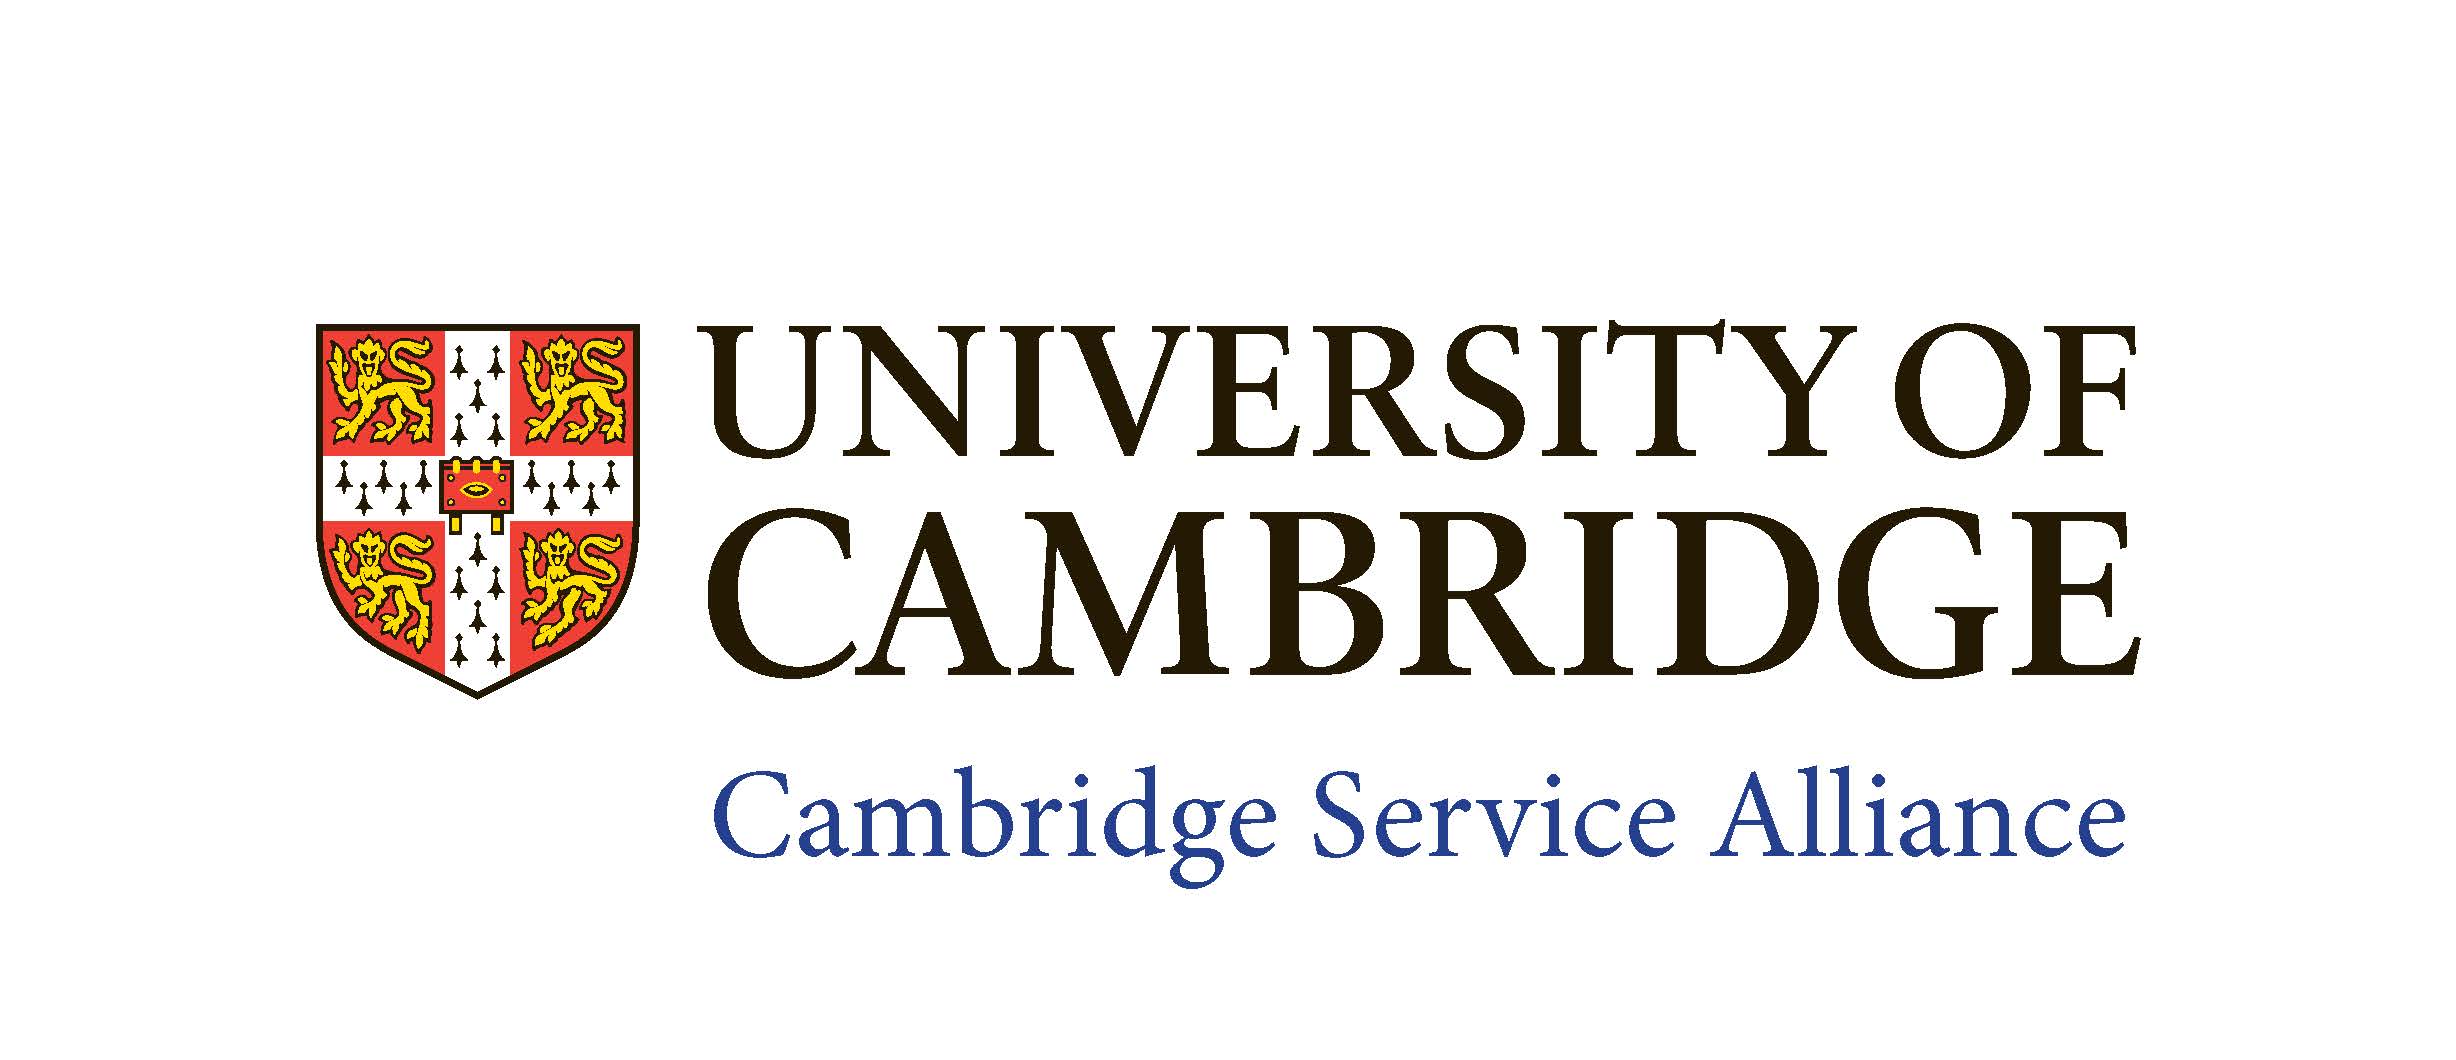 Created with Cambridge Service Alliance, University of Cambridge